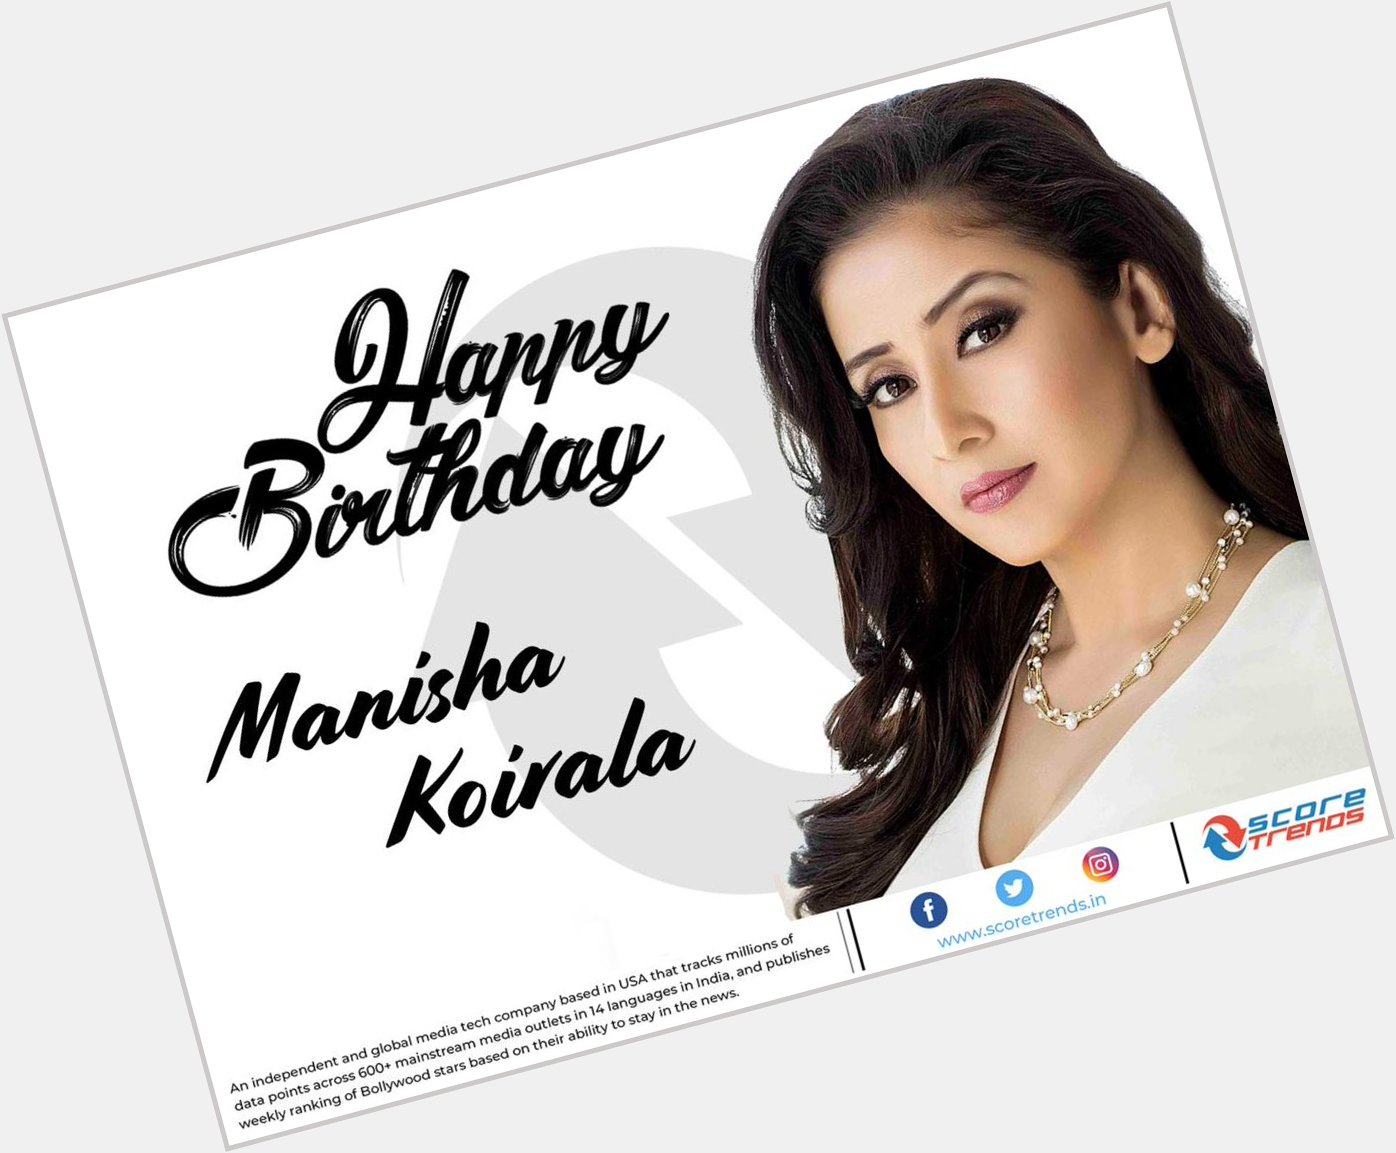 Score Trends wishes Manisha Koirala a Happy Birthday!! 